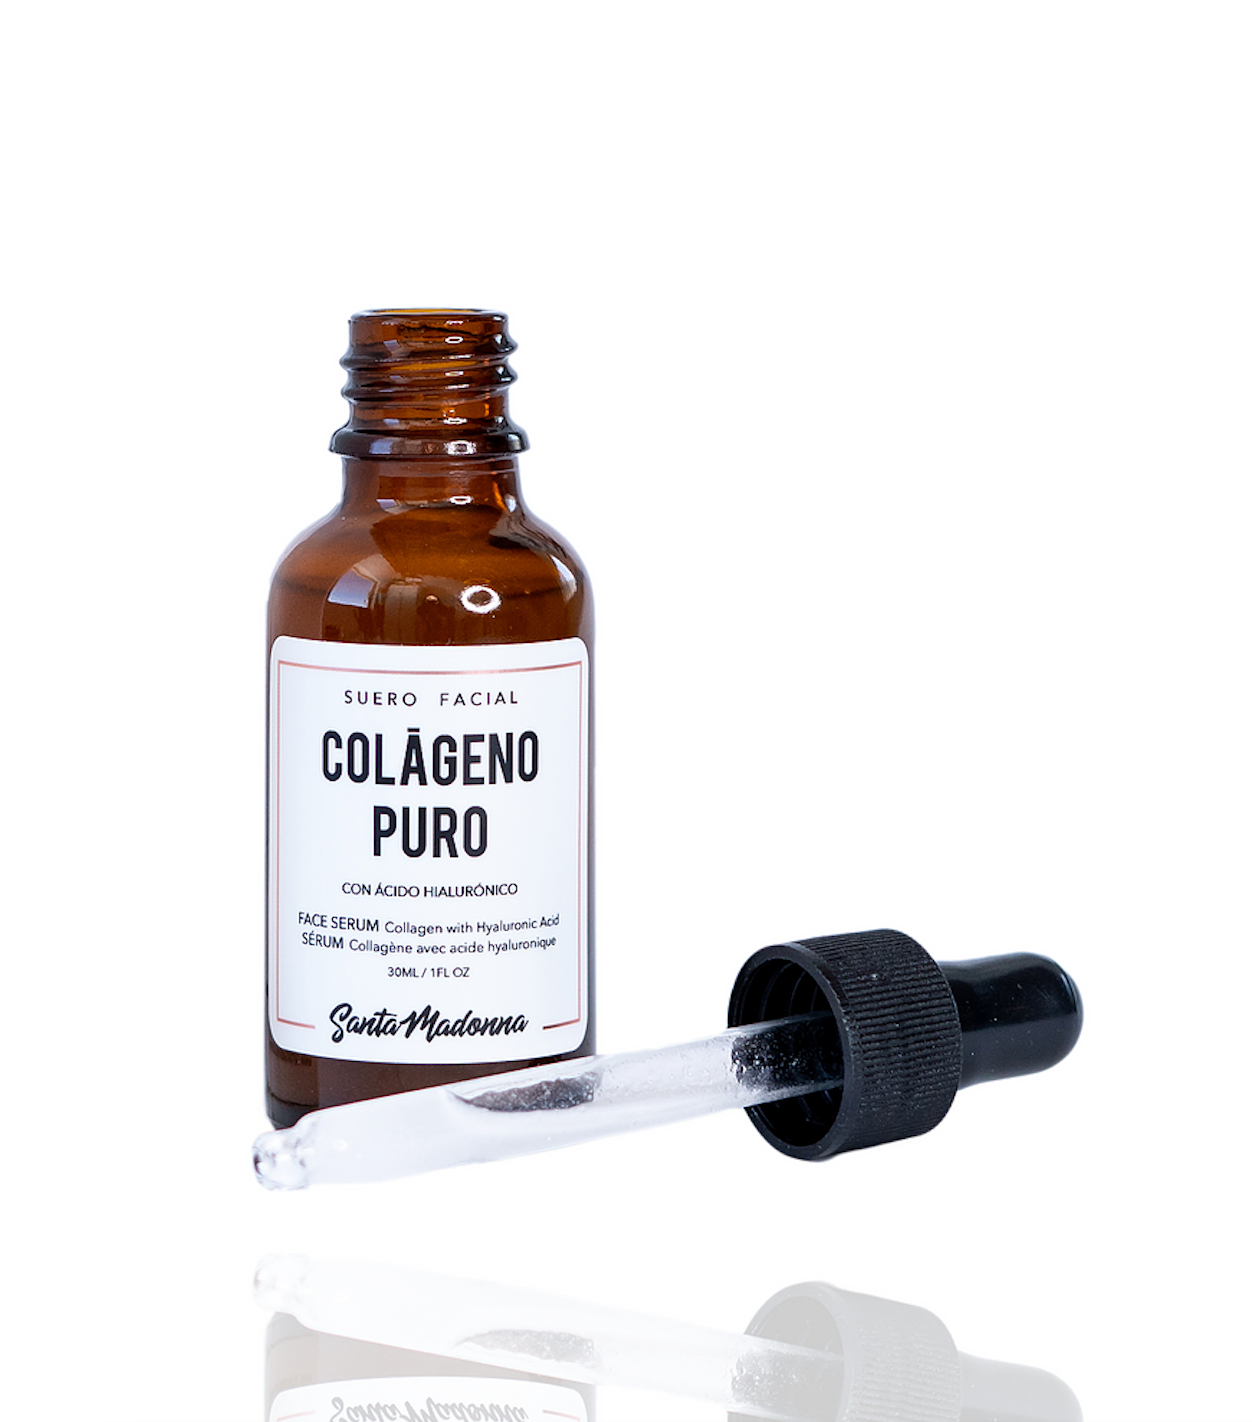 Pure collagen facial serum